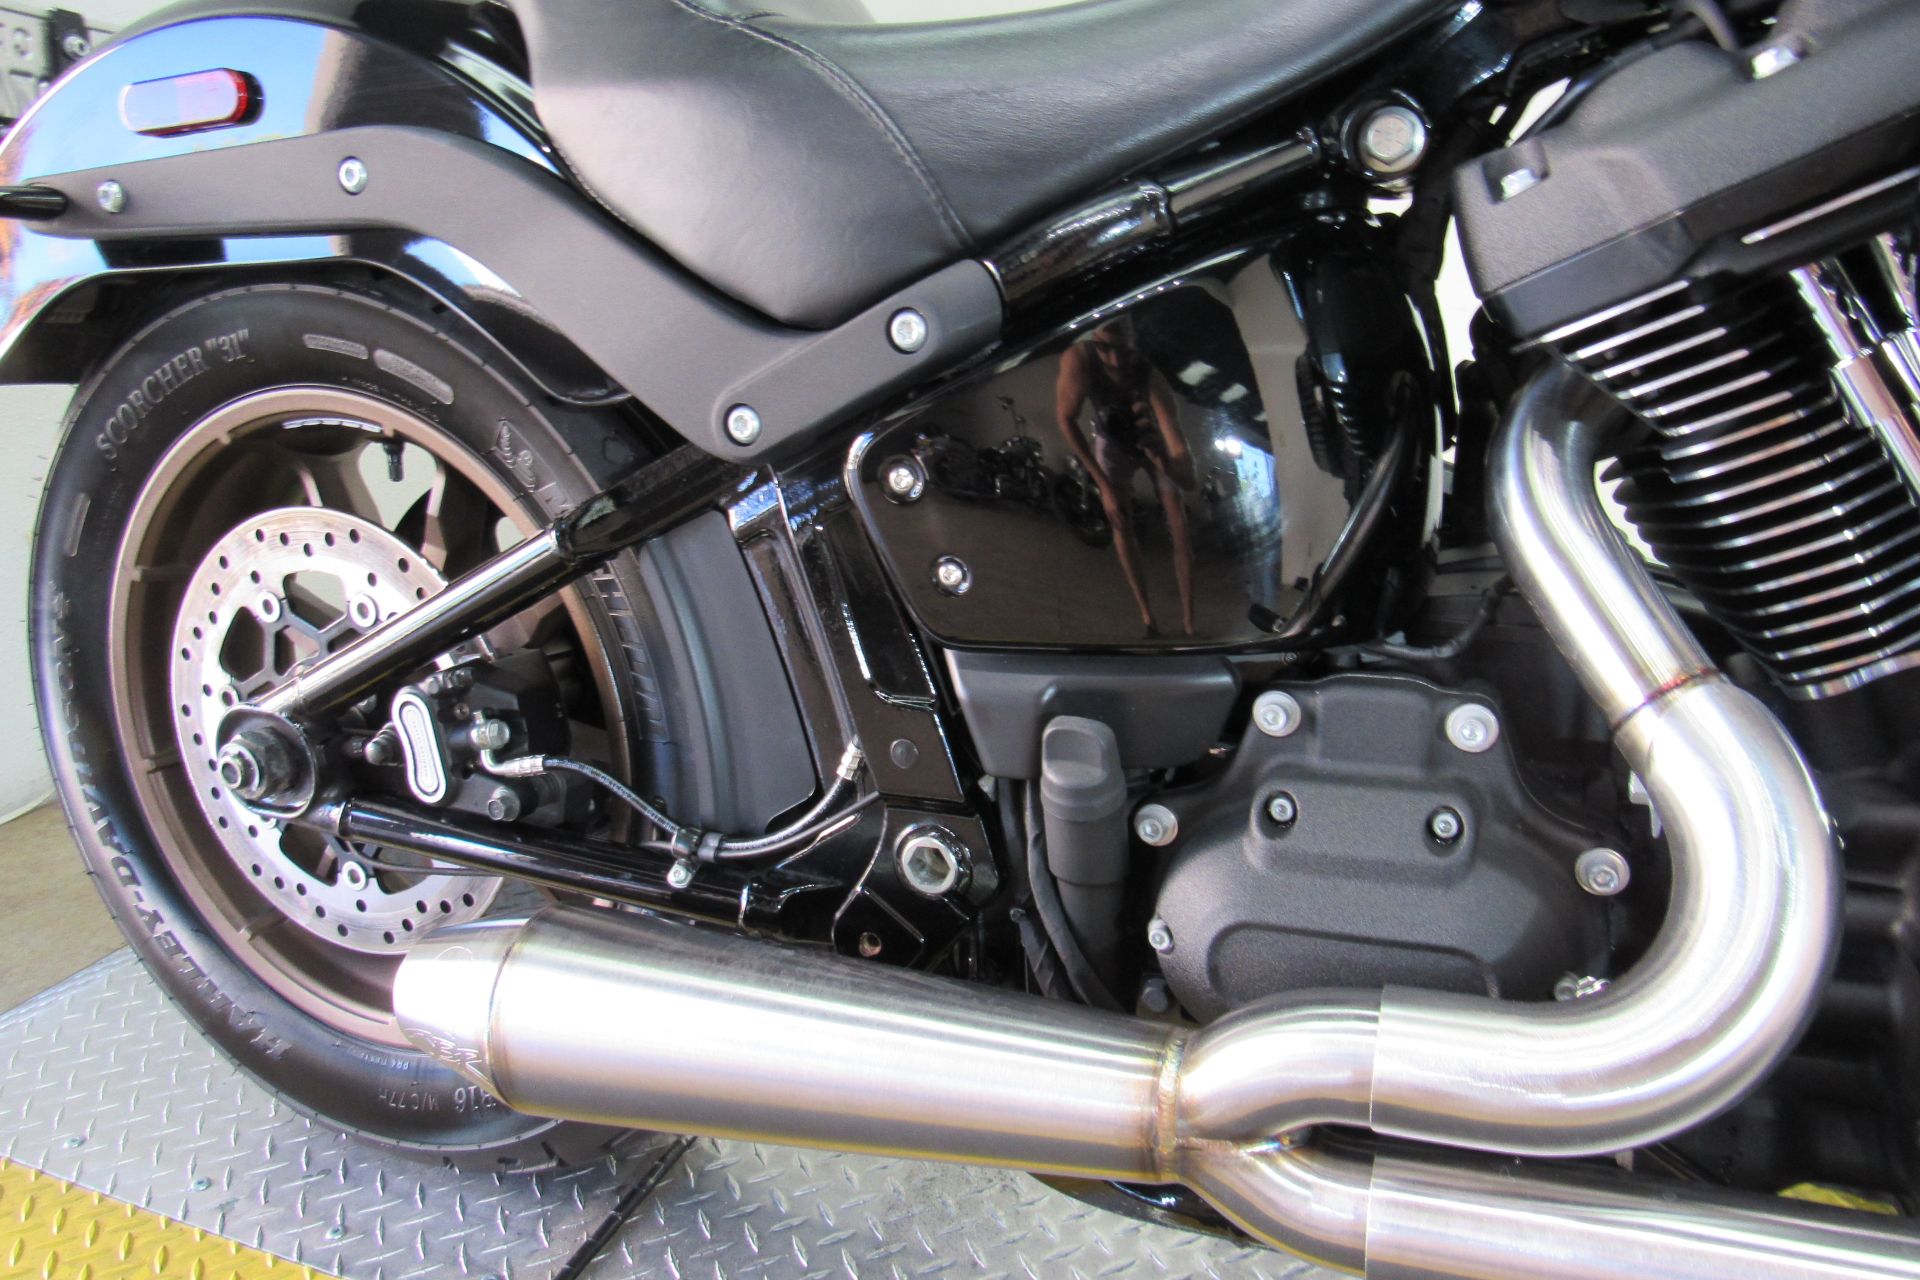 2021 Harley-Davidson Low Rider®S in Temecula, California - Photo 15